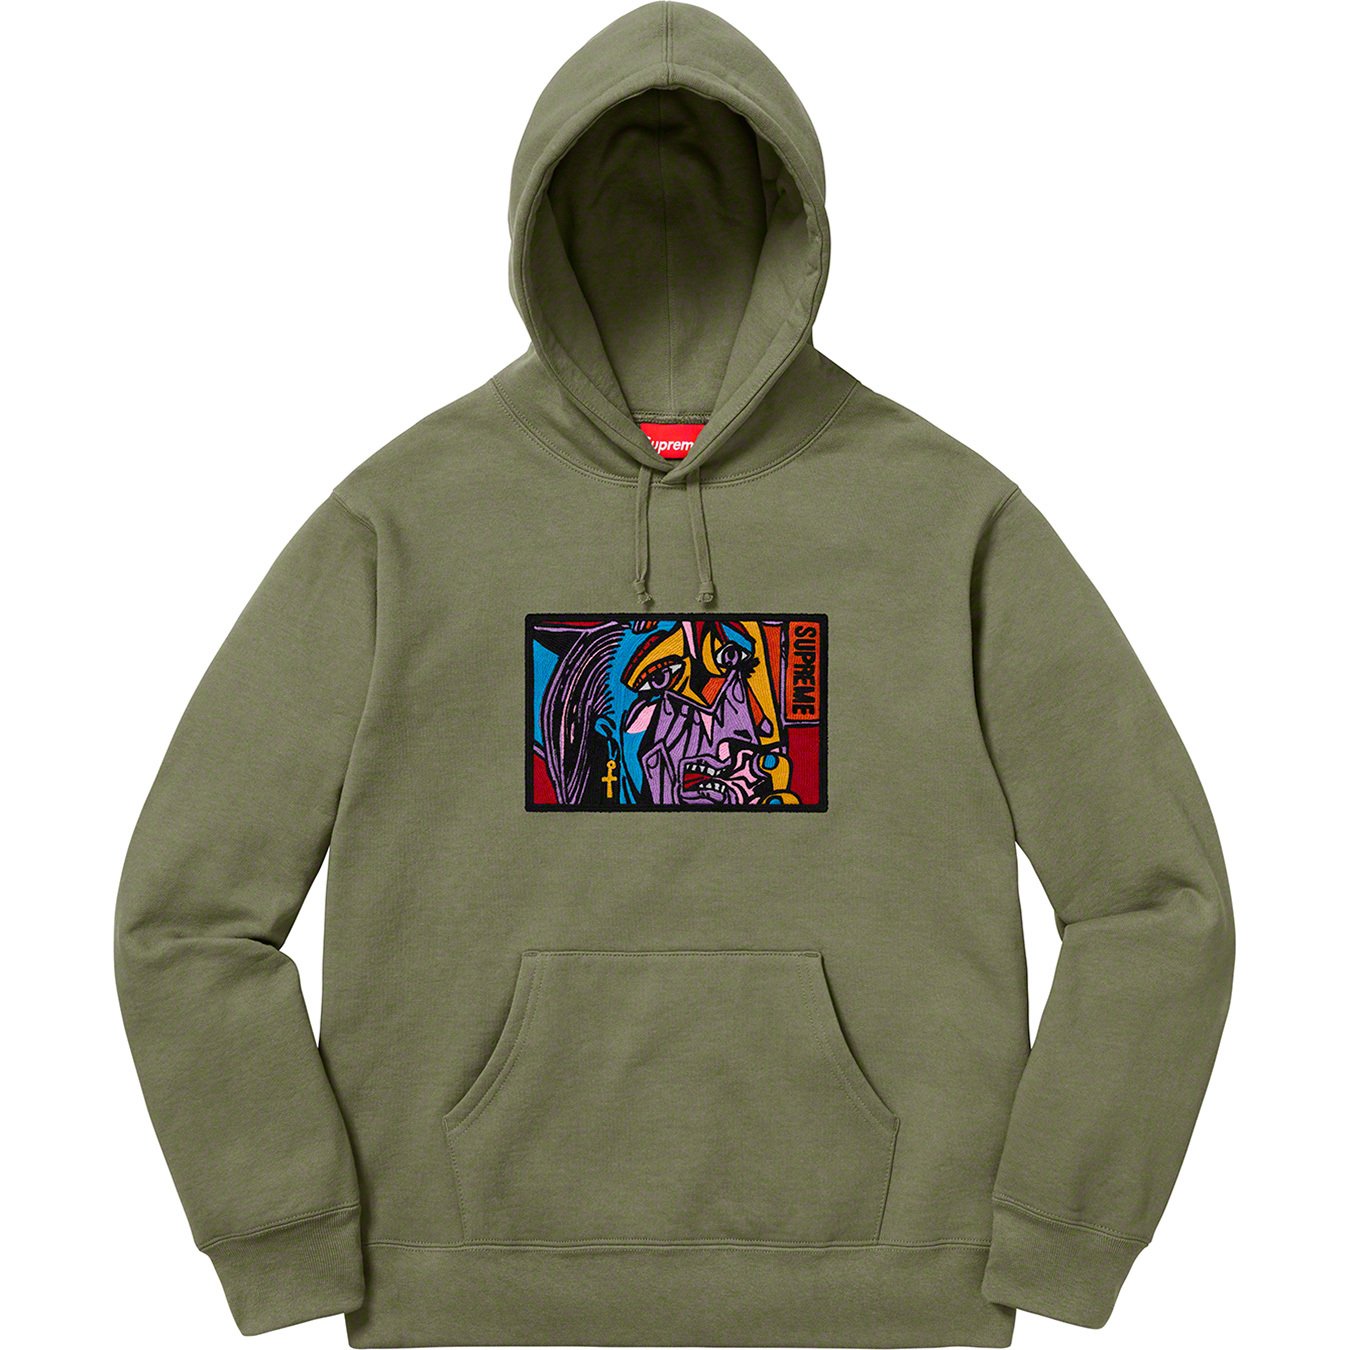 qqqwjf.chain stitch hooded sweatshirt supreme > Off 69% www.dsofop.com